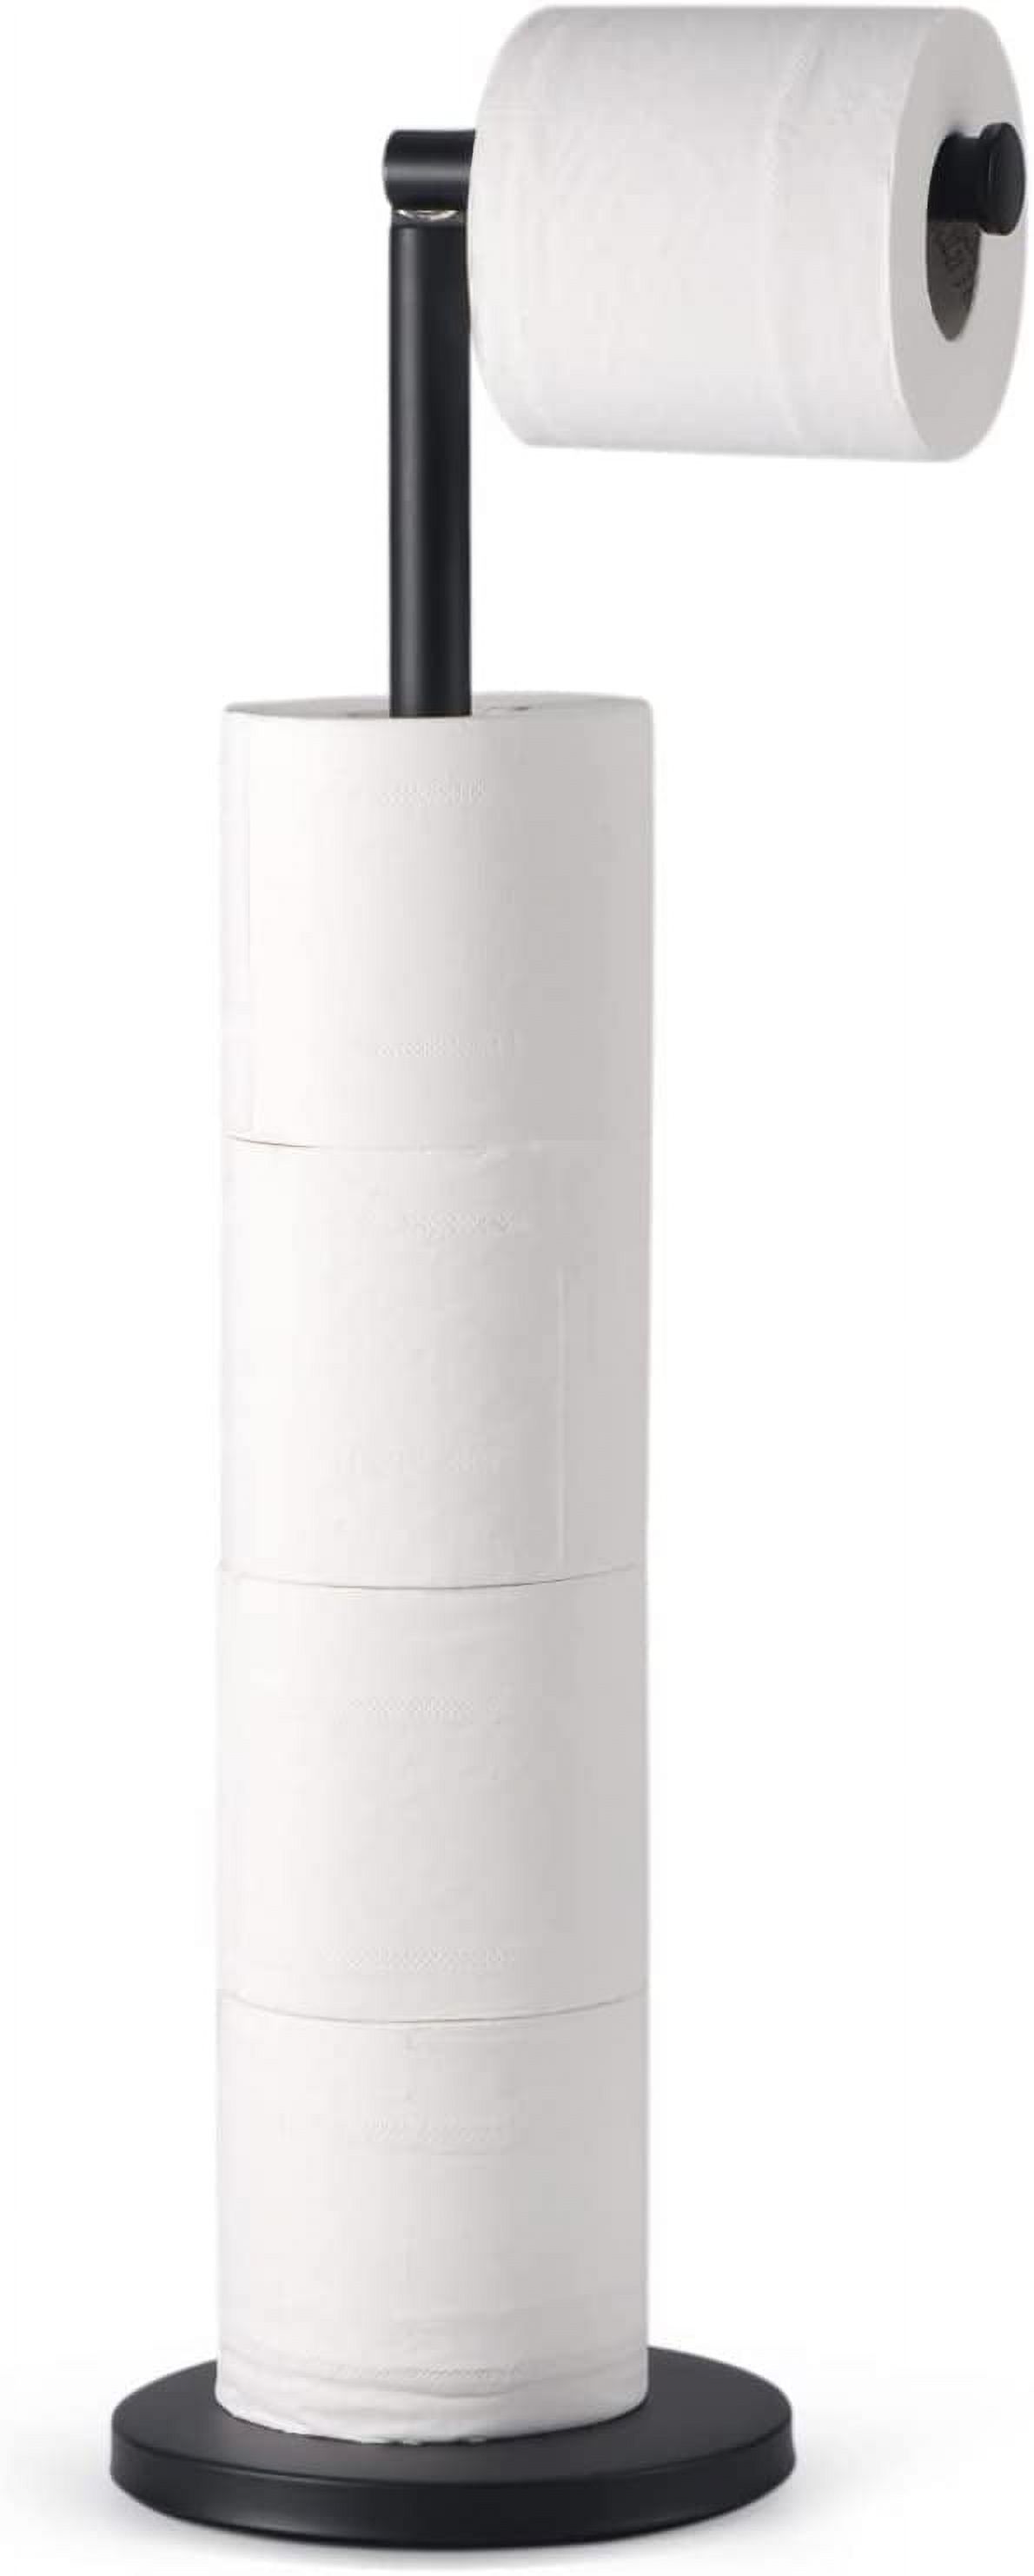 Reduced pricePopular pickfor "toilet paper holder free standing" Kusmil Free Standing Toilet Pape... | Walmart (US)